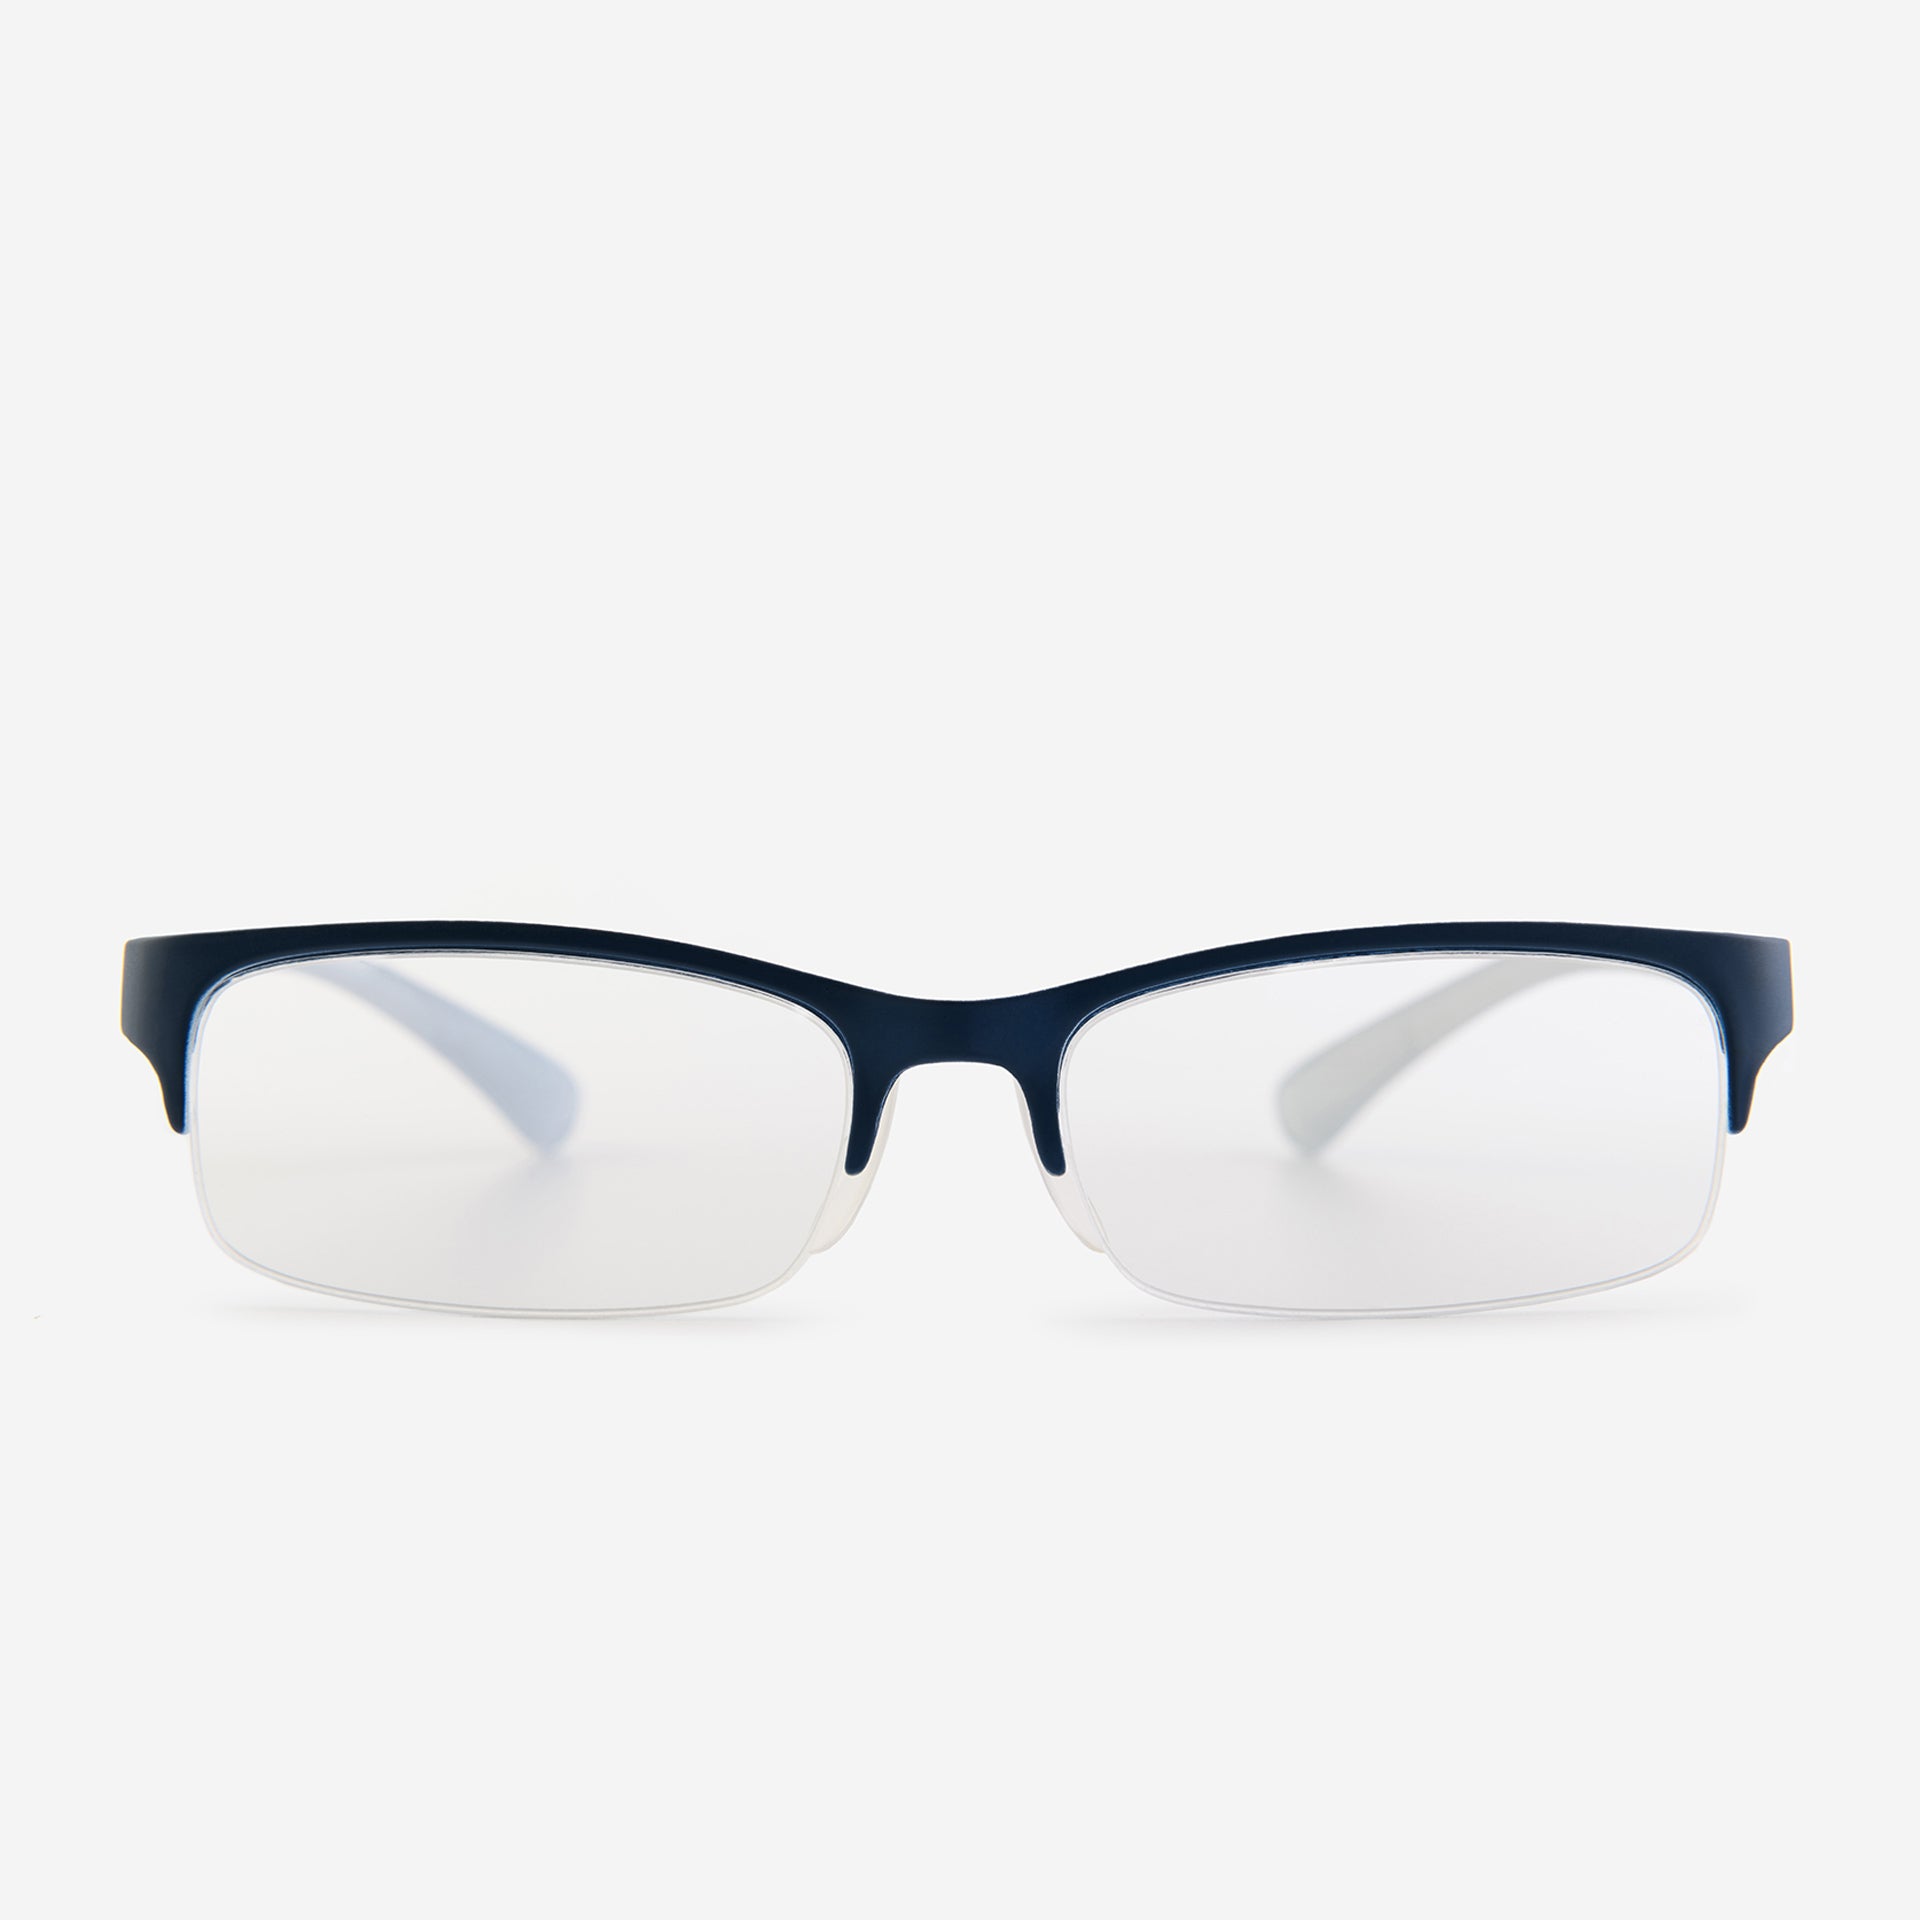 Blue half-rim reading glasses